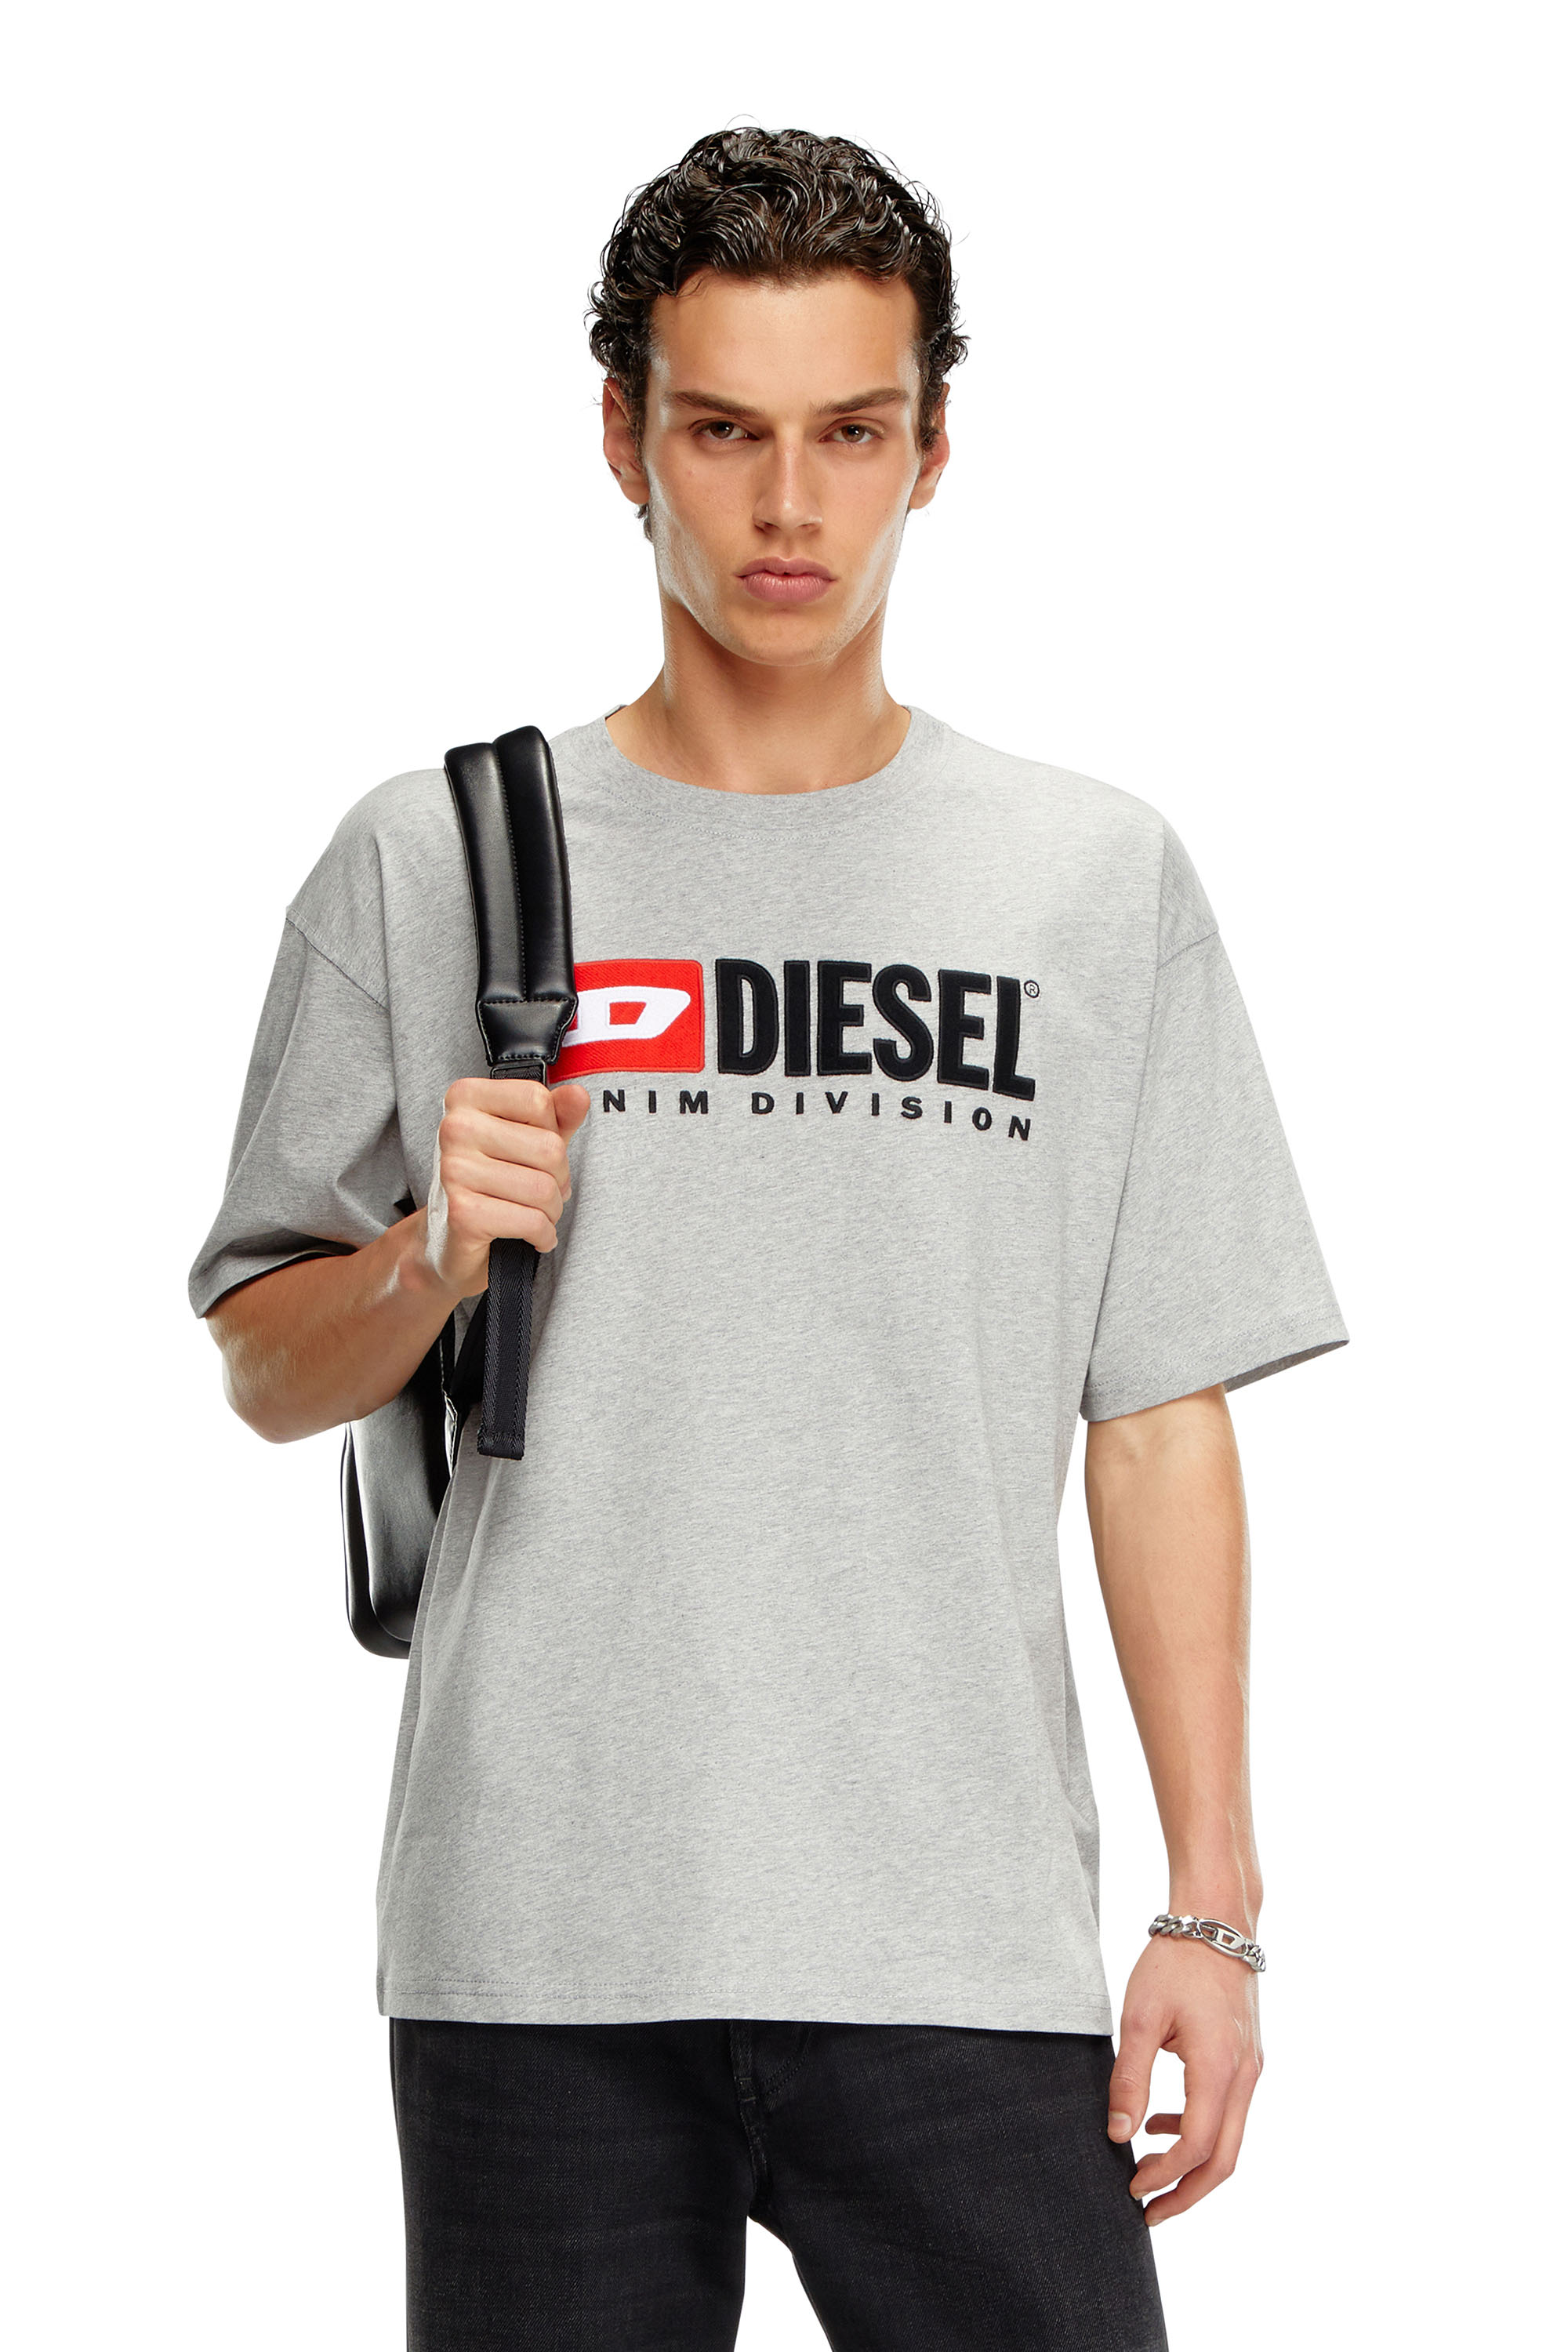 Diesel - T-BOXT-DIV, Grey - Image 1